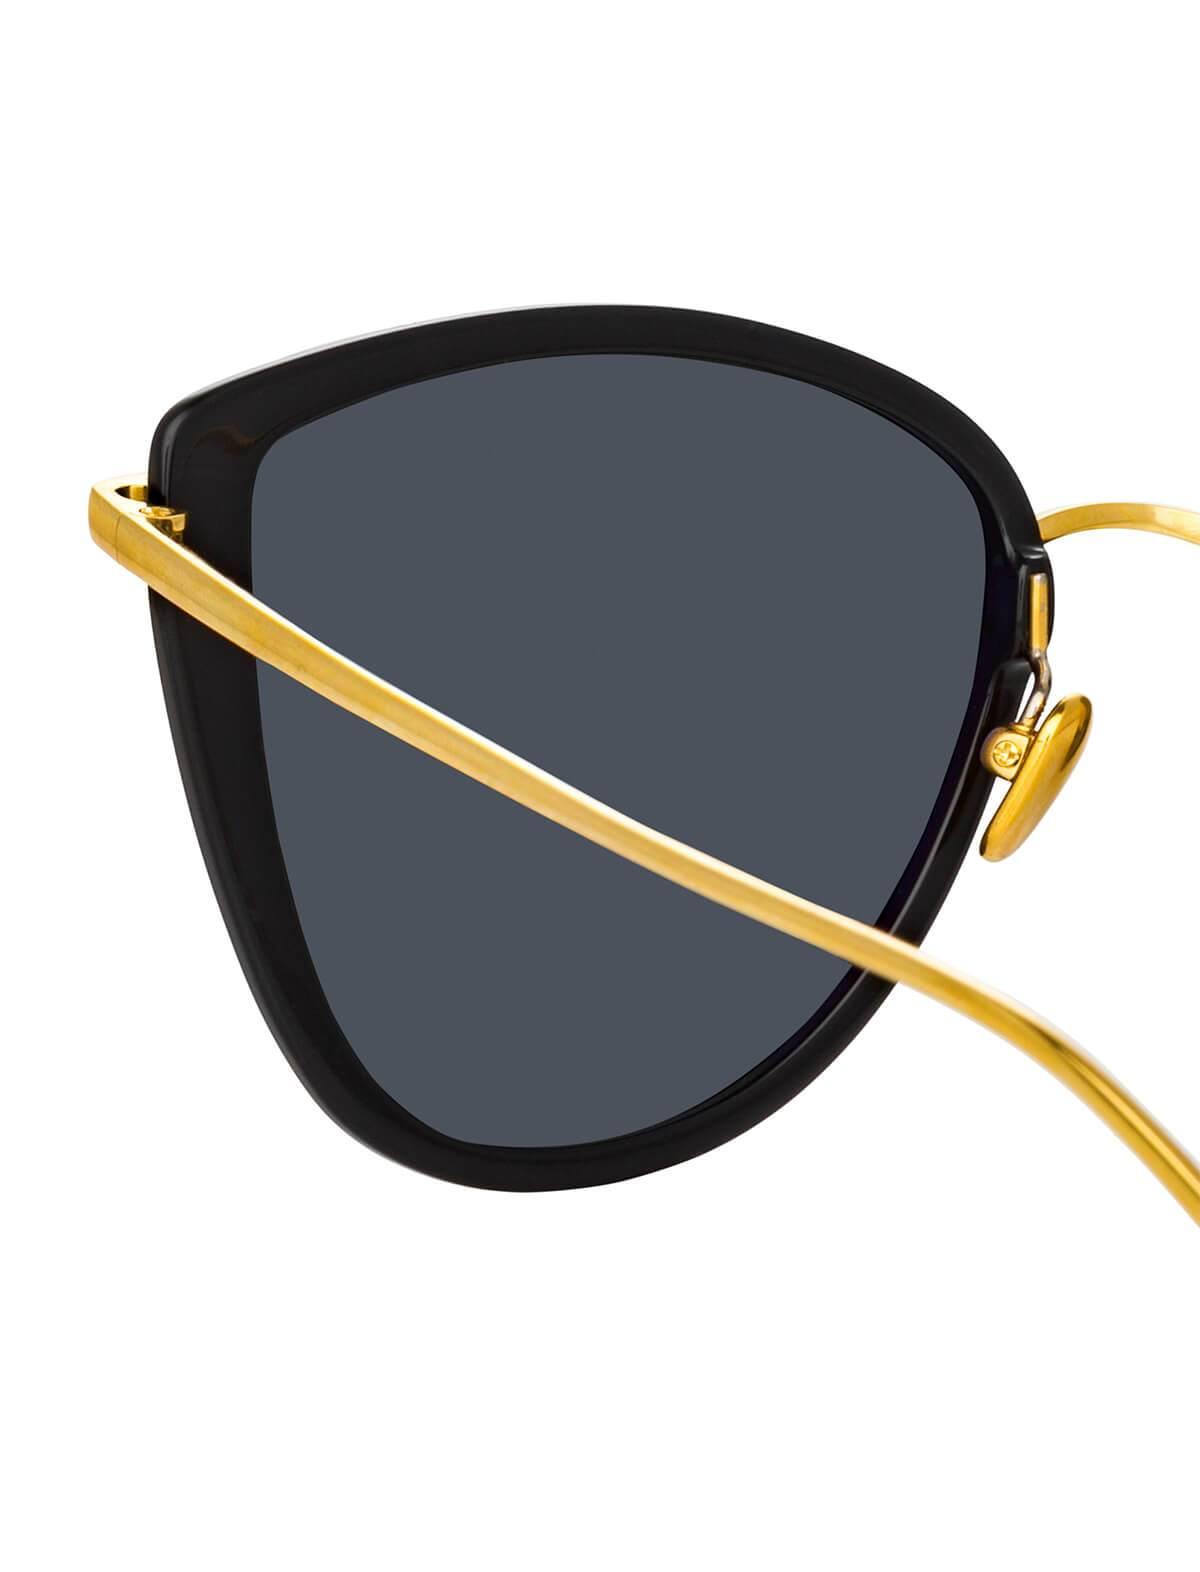 LINDA FARROW Liza Cat Eye Sunglasses In Black And 22-Carat Yellow Gold | CLOSET Singapore